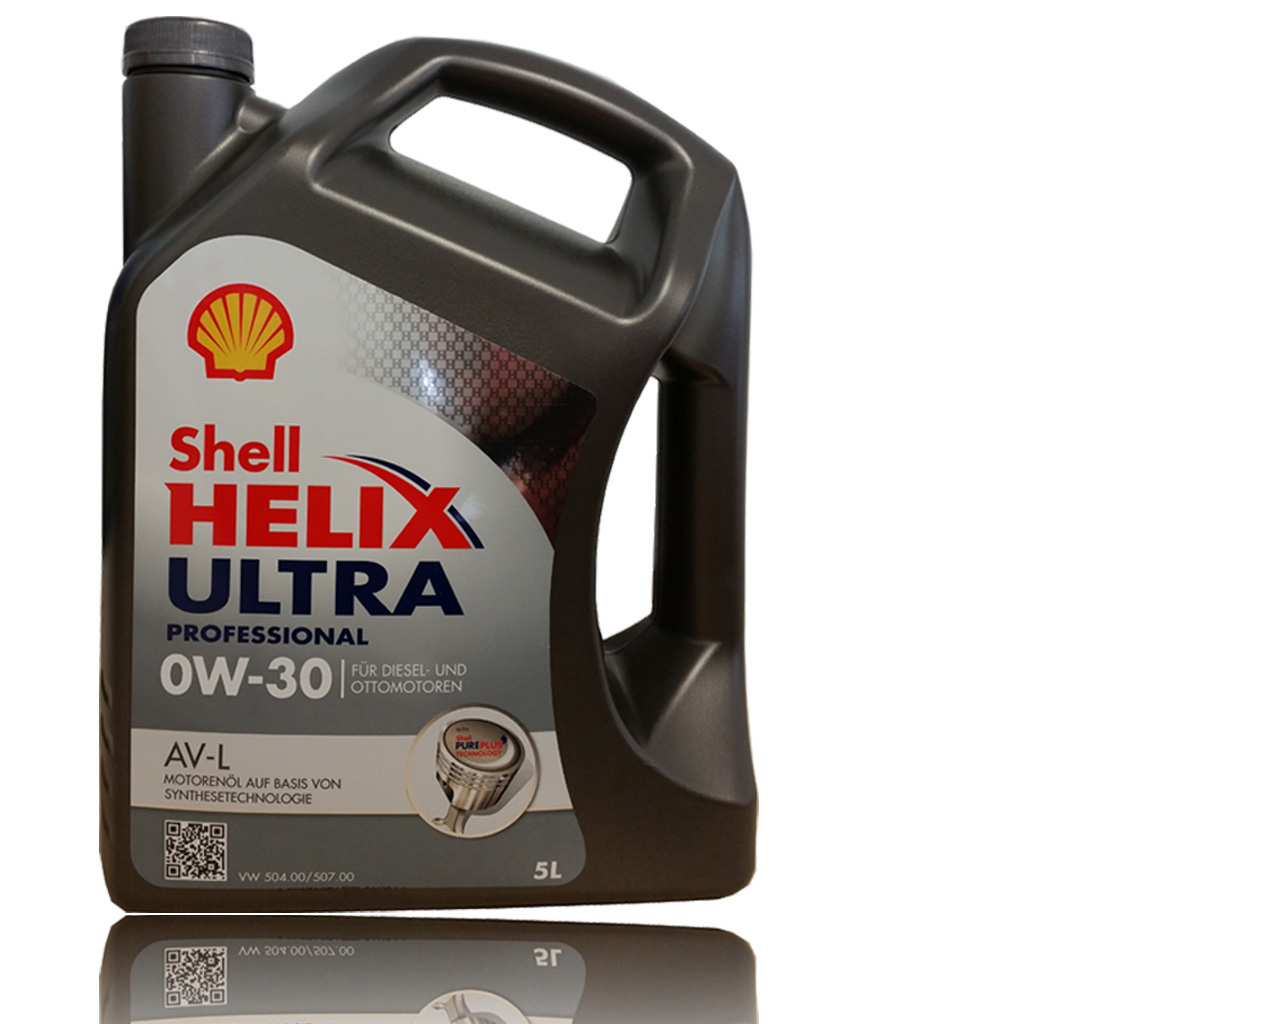 Ultra av. Helix Ultra professional av-l 0w-30. Shell Helix Ultra 0w-30 504/507. Shell Helix Ultra av 0w-30. VW 504.00/507.00 Shell.